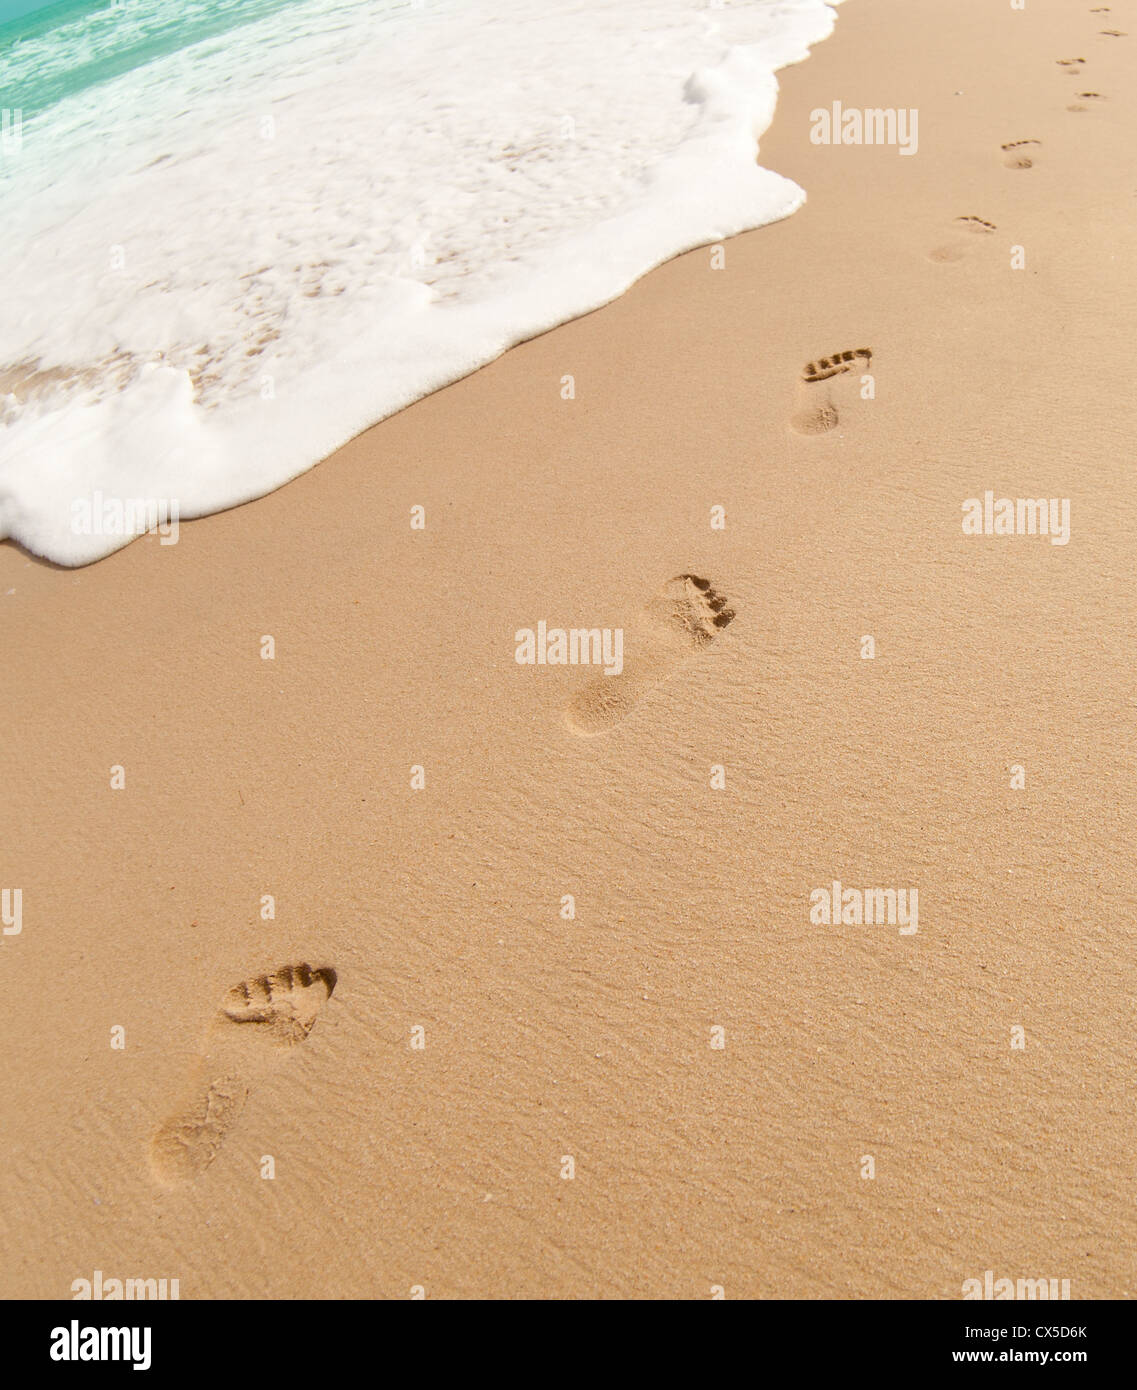 Footprints on sand of ocean beach Stock Photo